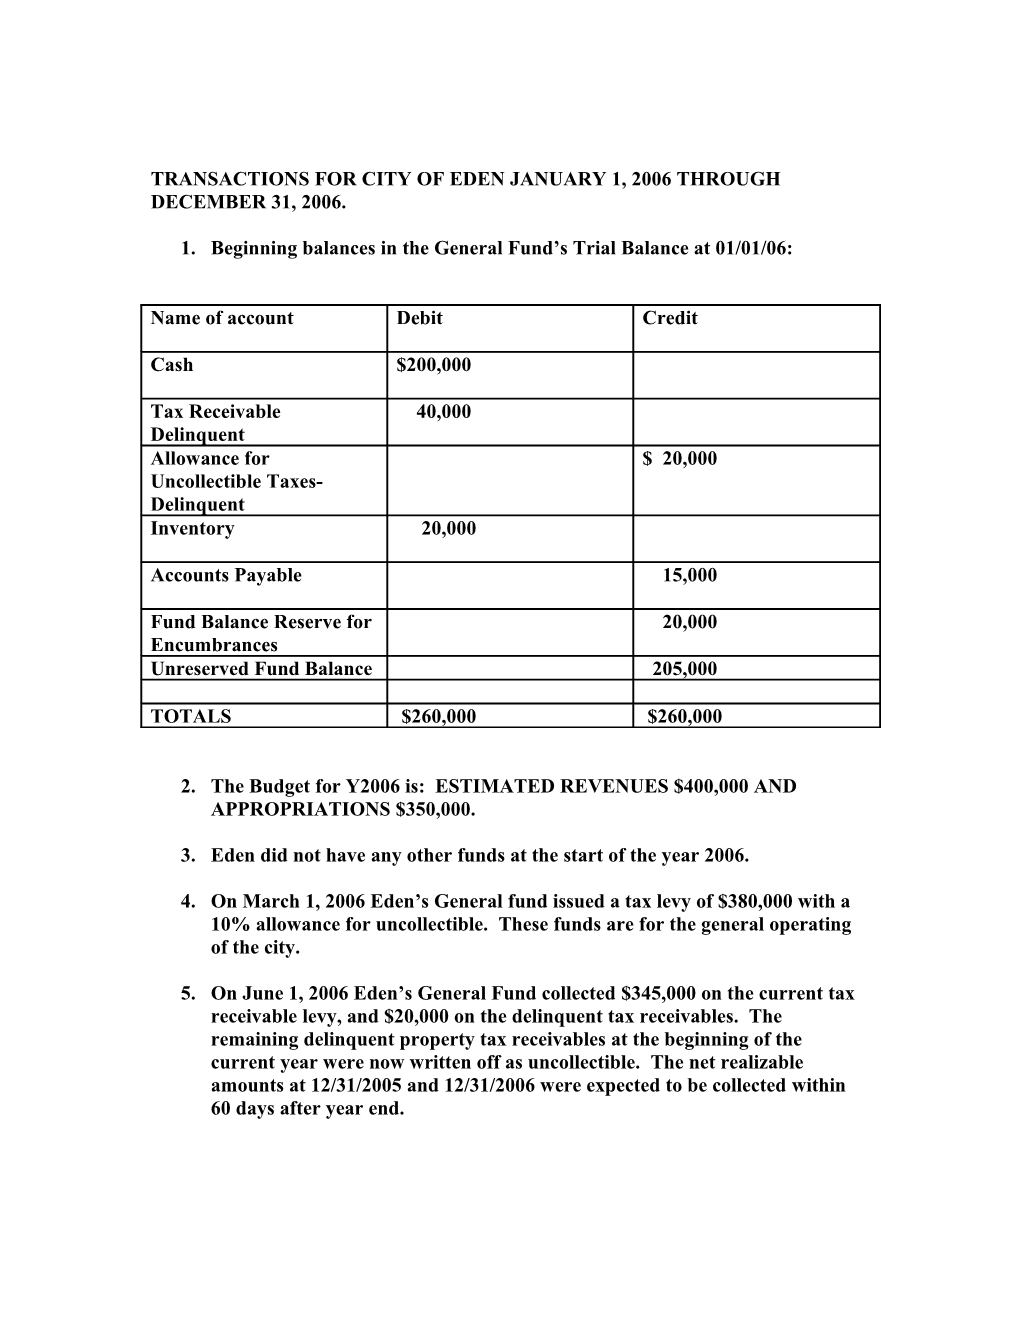 Transactions for City of Eden January 1, 2006 Through December 31, 2006